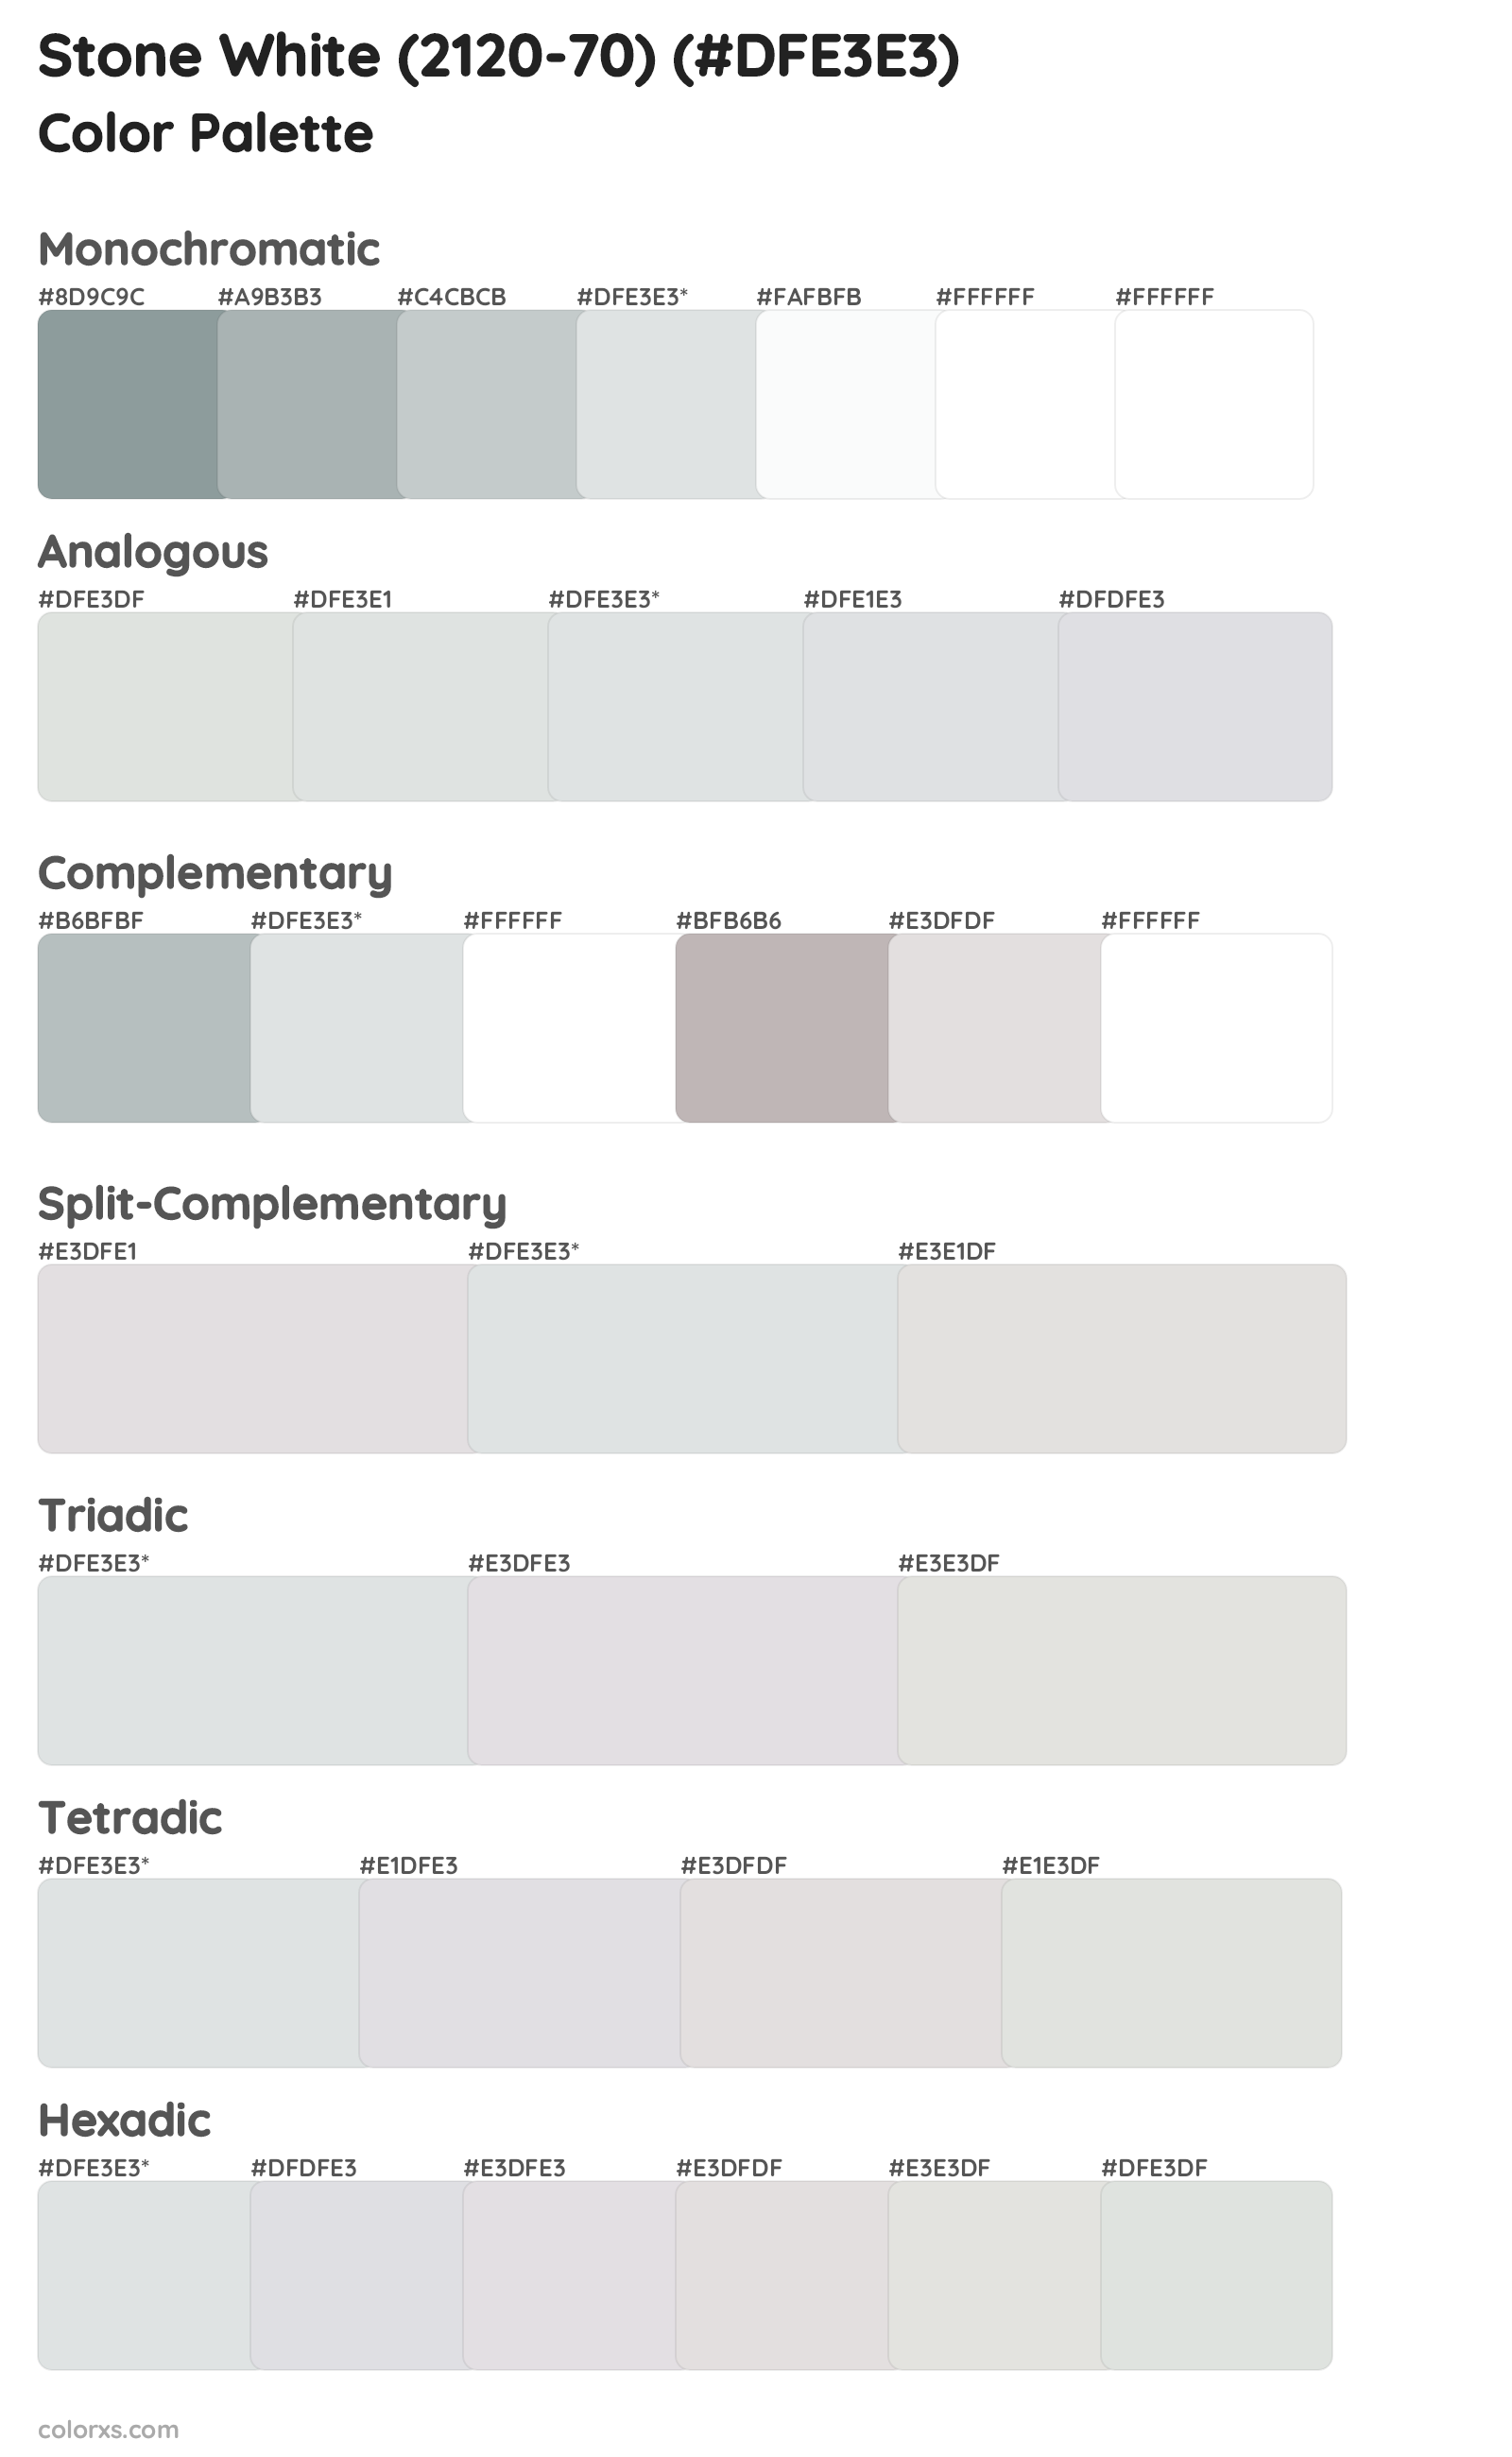 Stone White (2120-70) Color Scheme Palettes